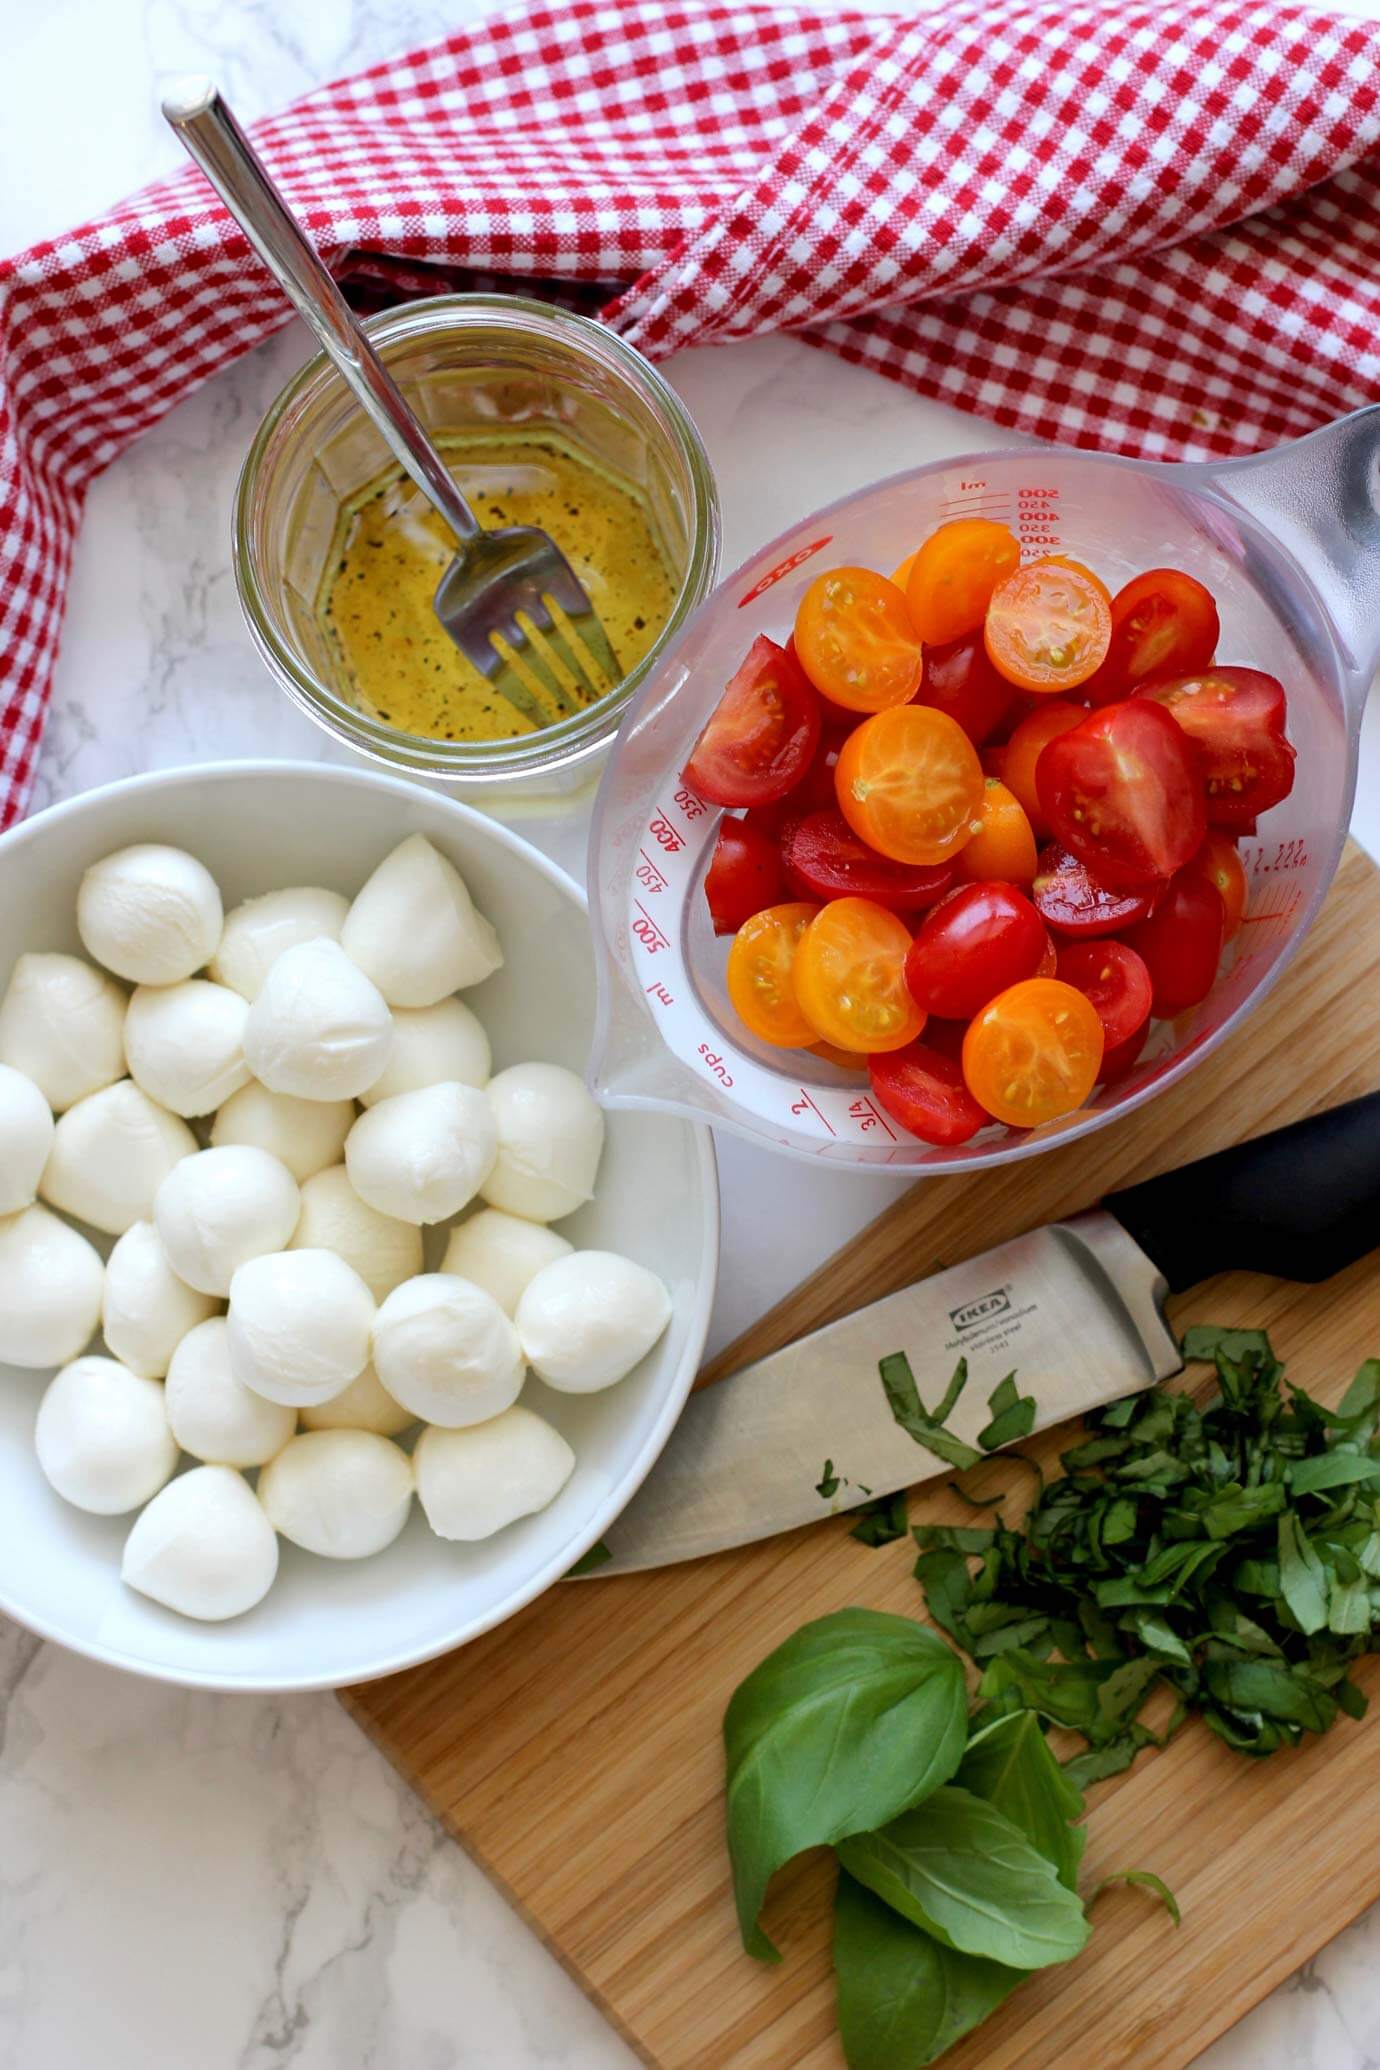 Ingredients that make a mozzarella and tomato salad